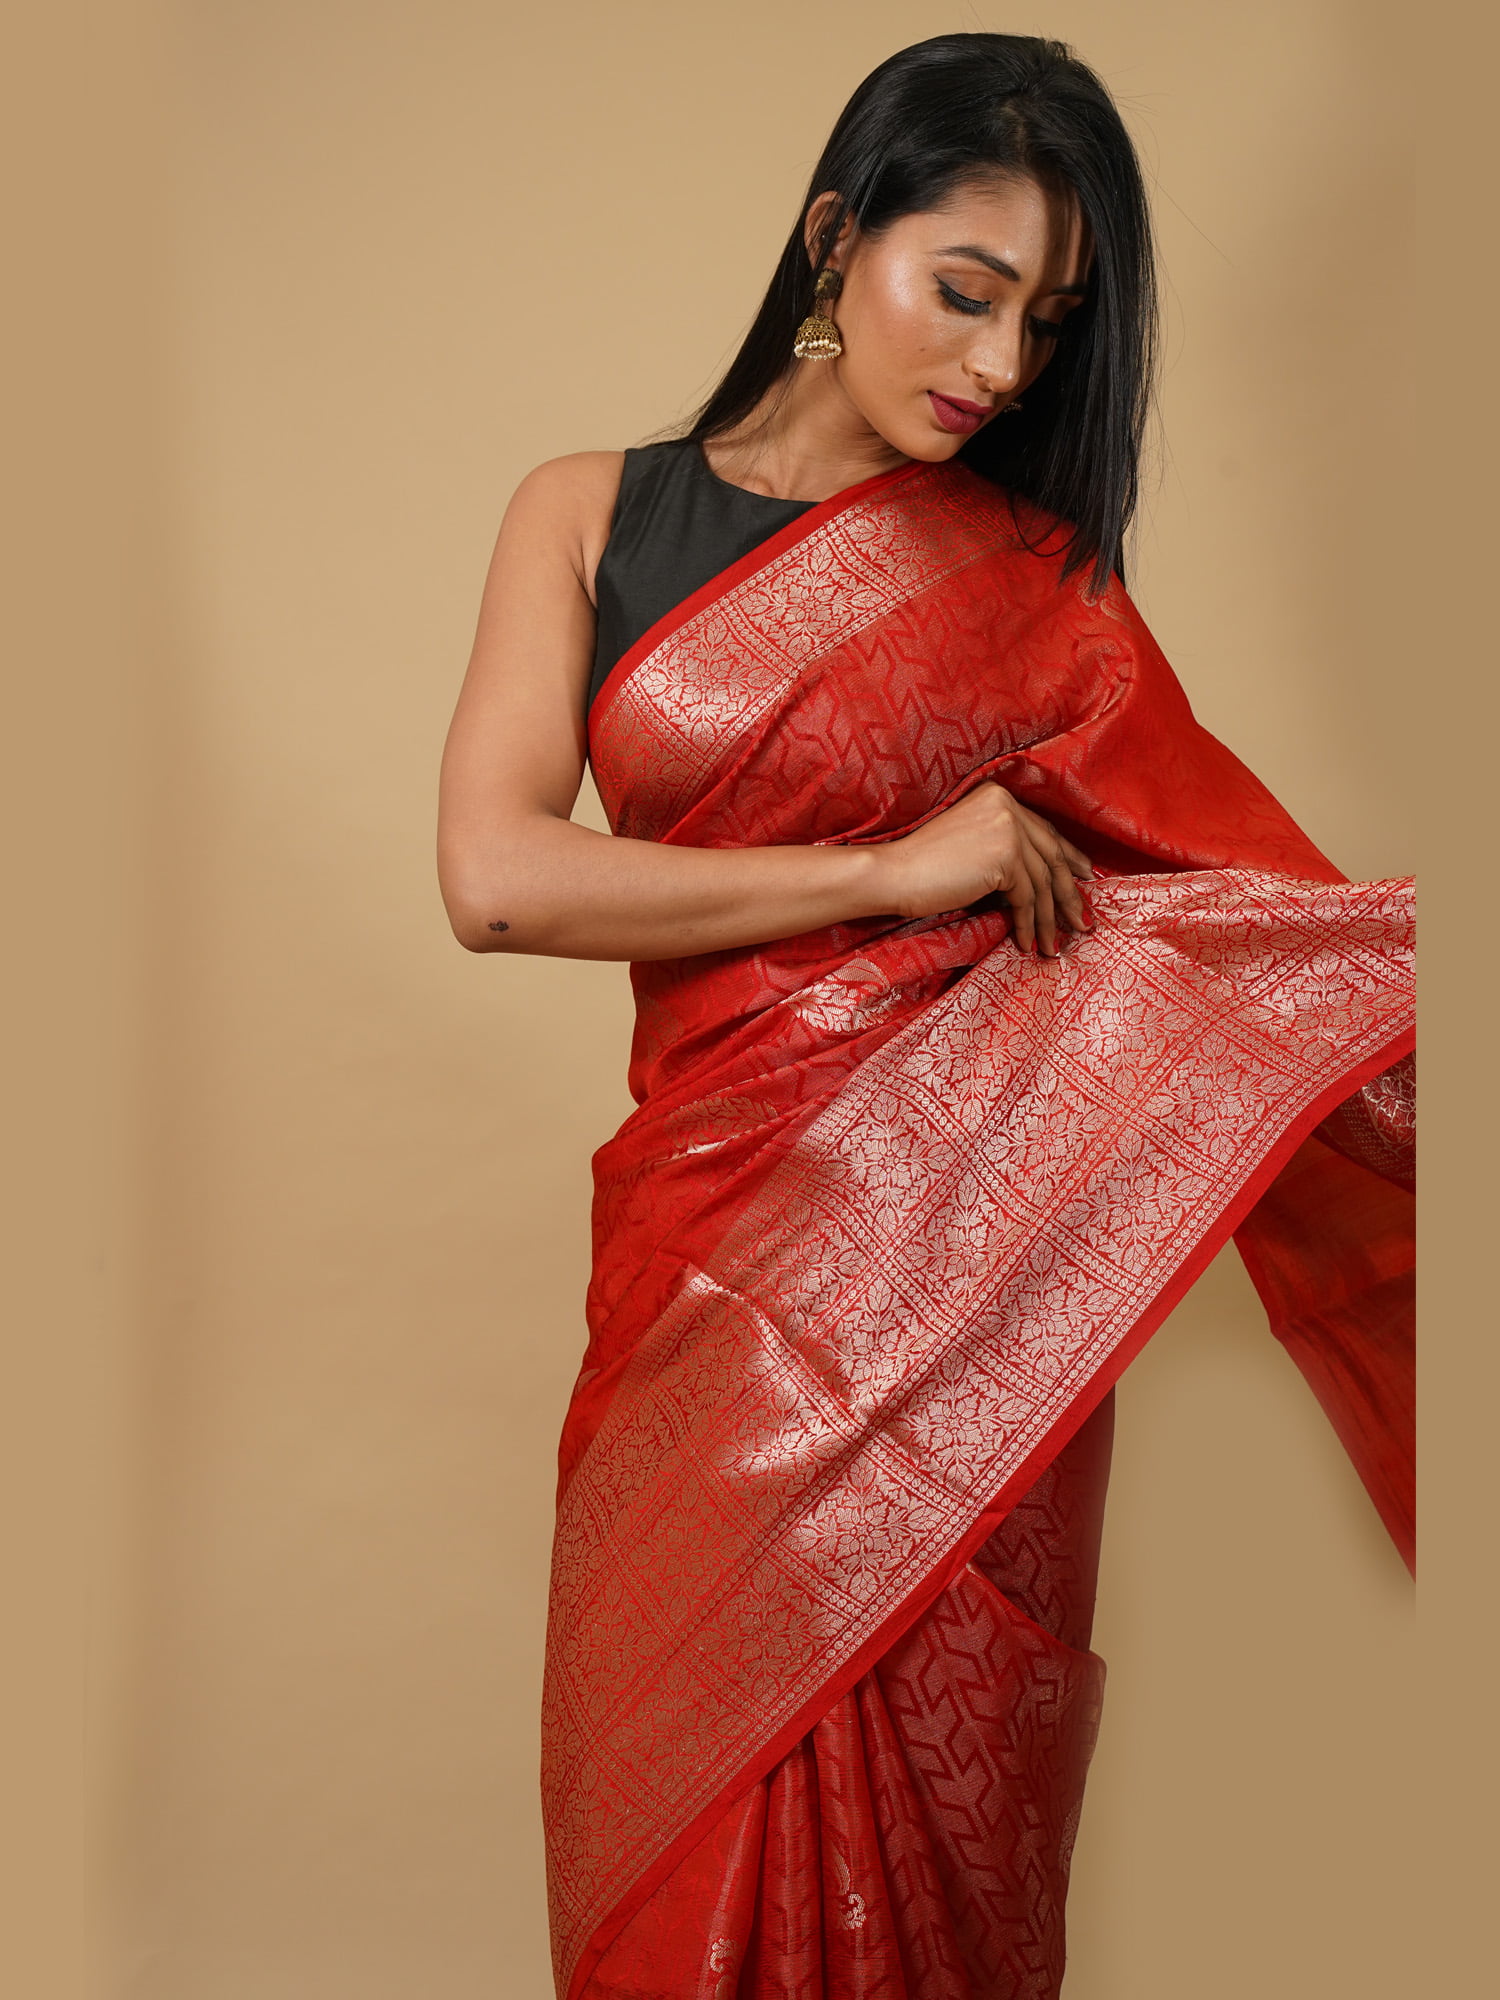 Handwoven Red Color Chiniya Silk Saree With White Zari Banarasi Threads